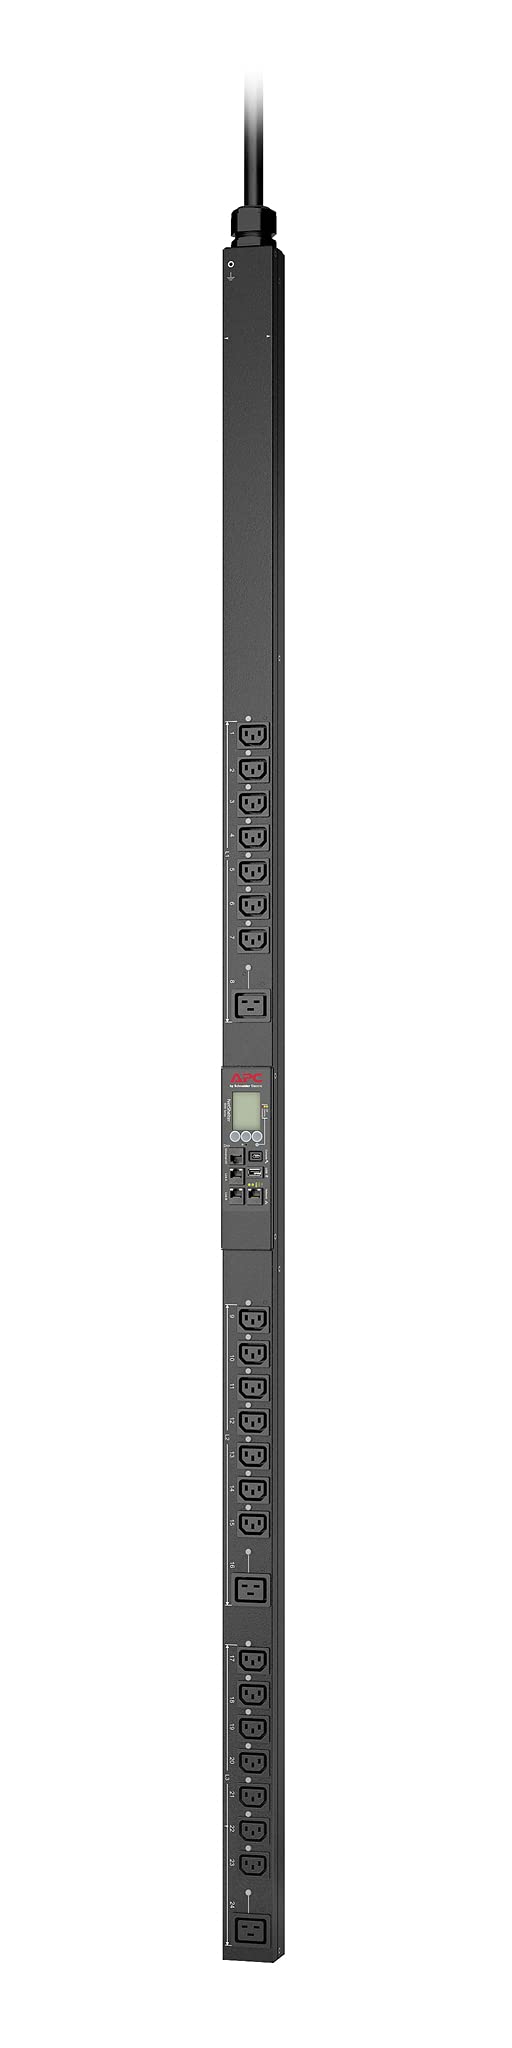 RACK PDU 9000 SWITCHED ZEROU